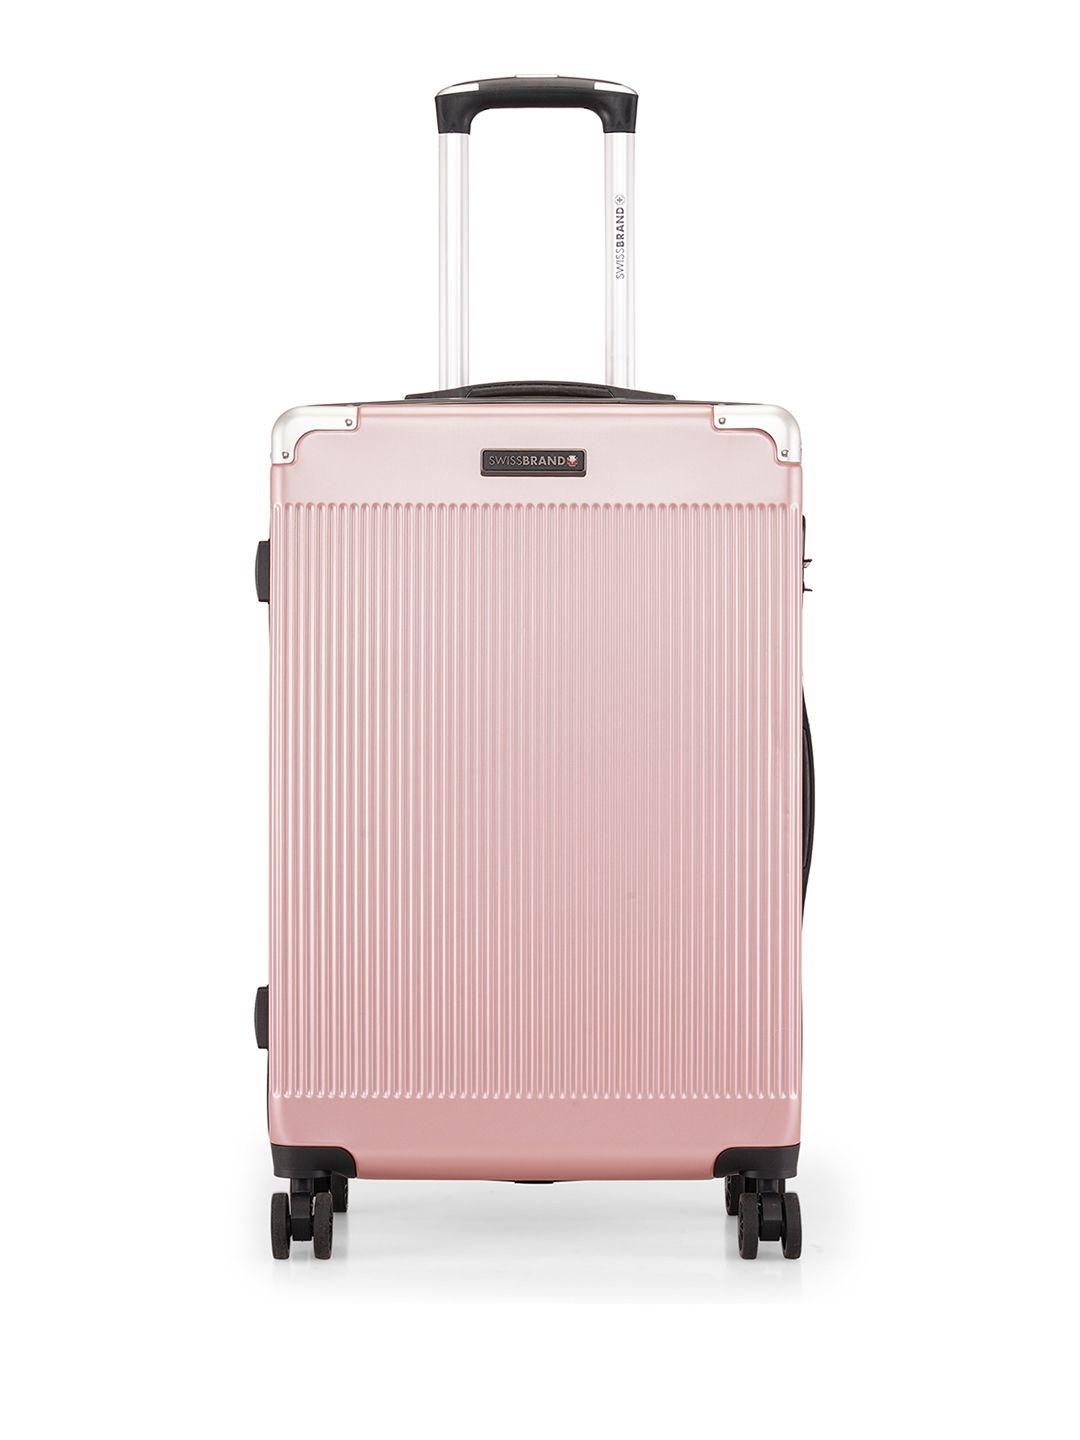 swiss brand rose textured medium trolley suitcase